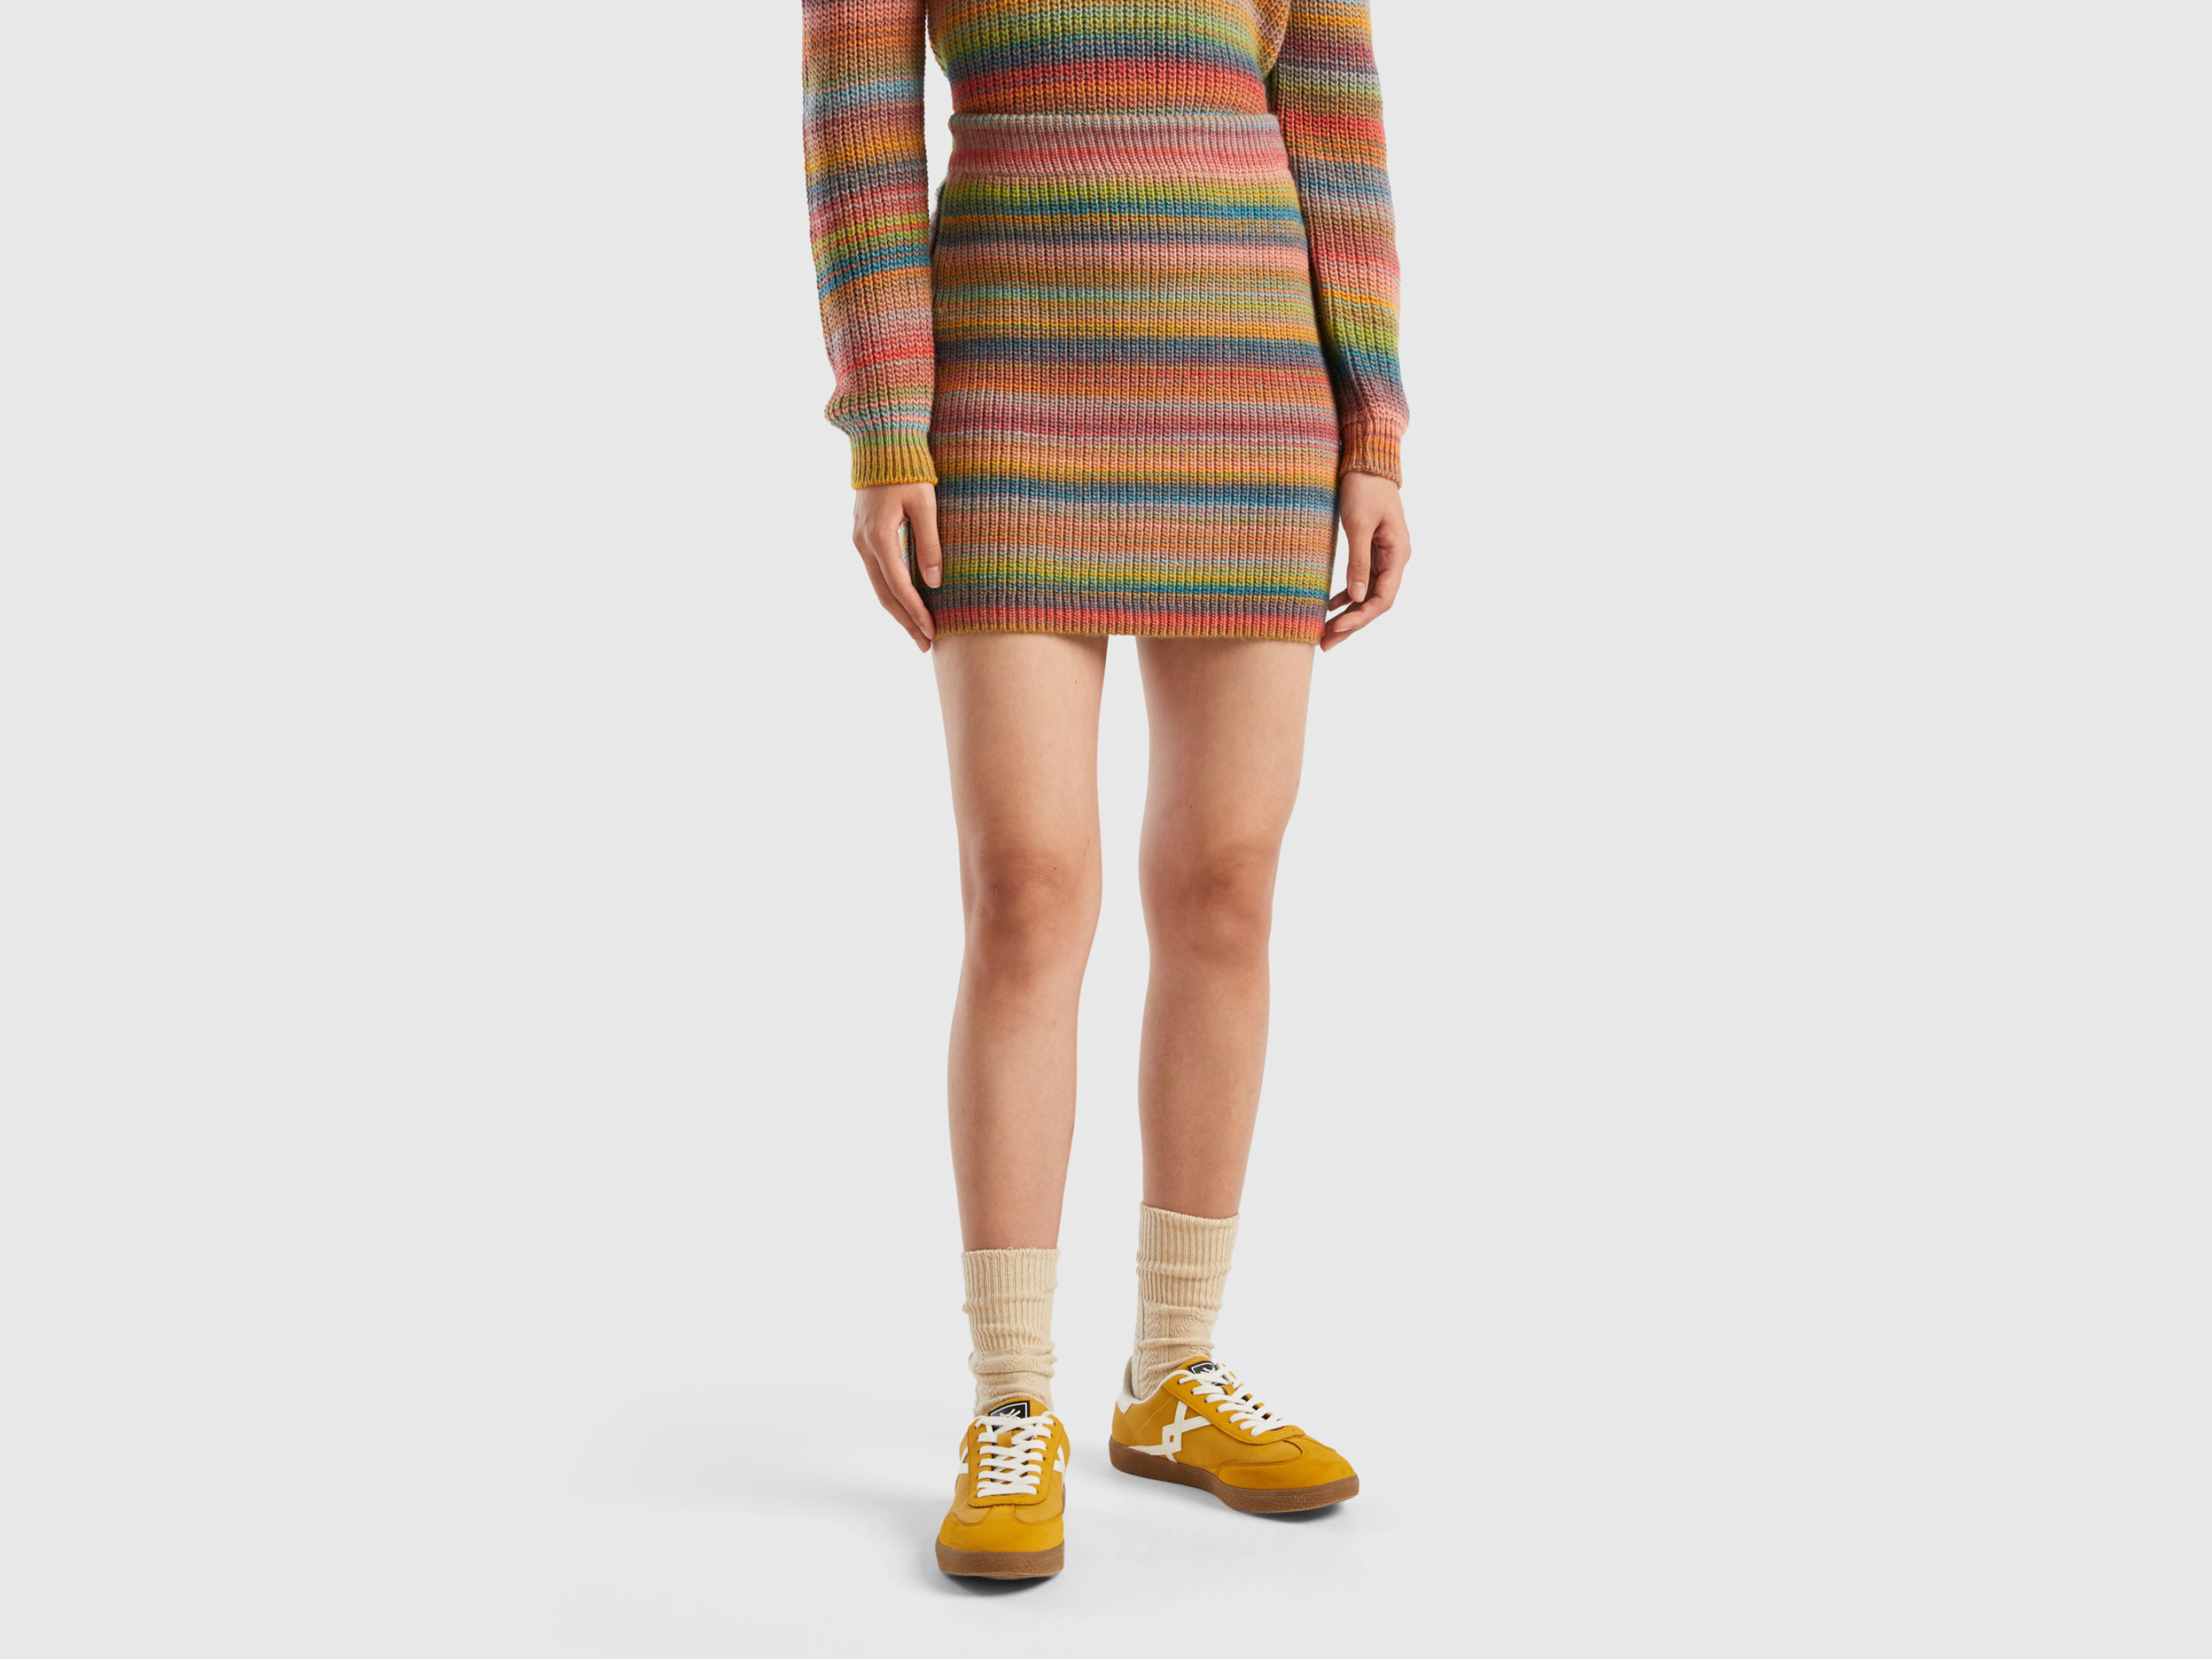 Benetton, Striped Knit Mini Skirt, size M, Multi-color, Women